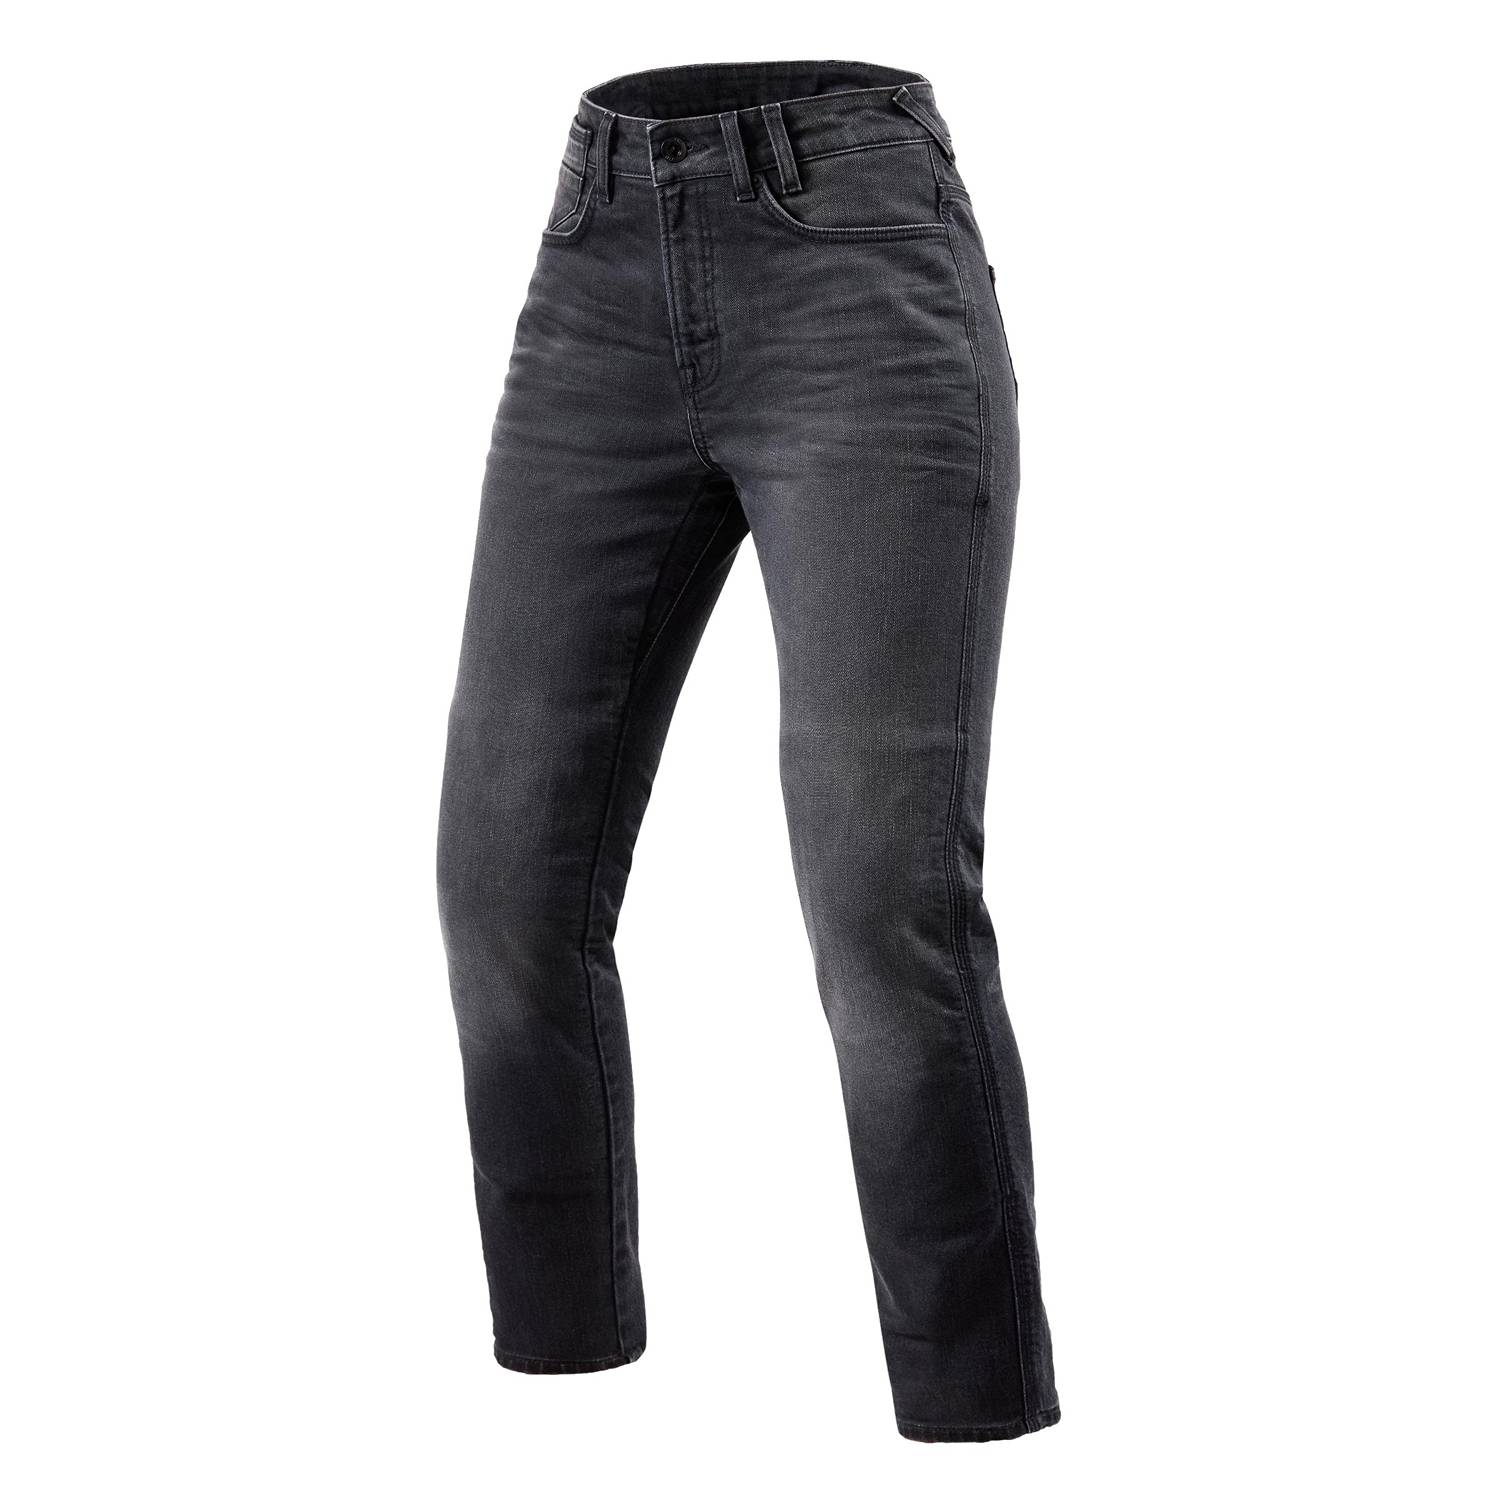 Image of REV'IT! Jeans Victoria 2 Ladies SF Mid Grey Used Motorcycle Jeans Size L32/W27 EN